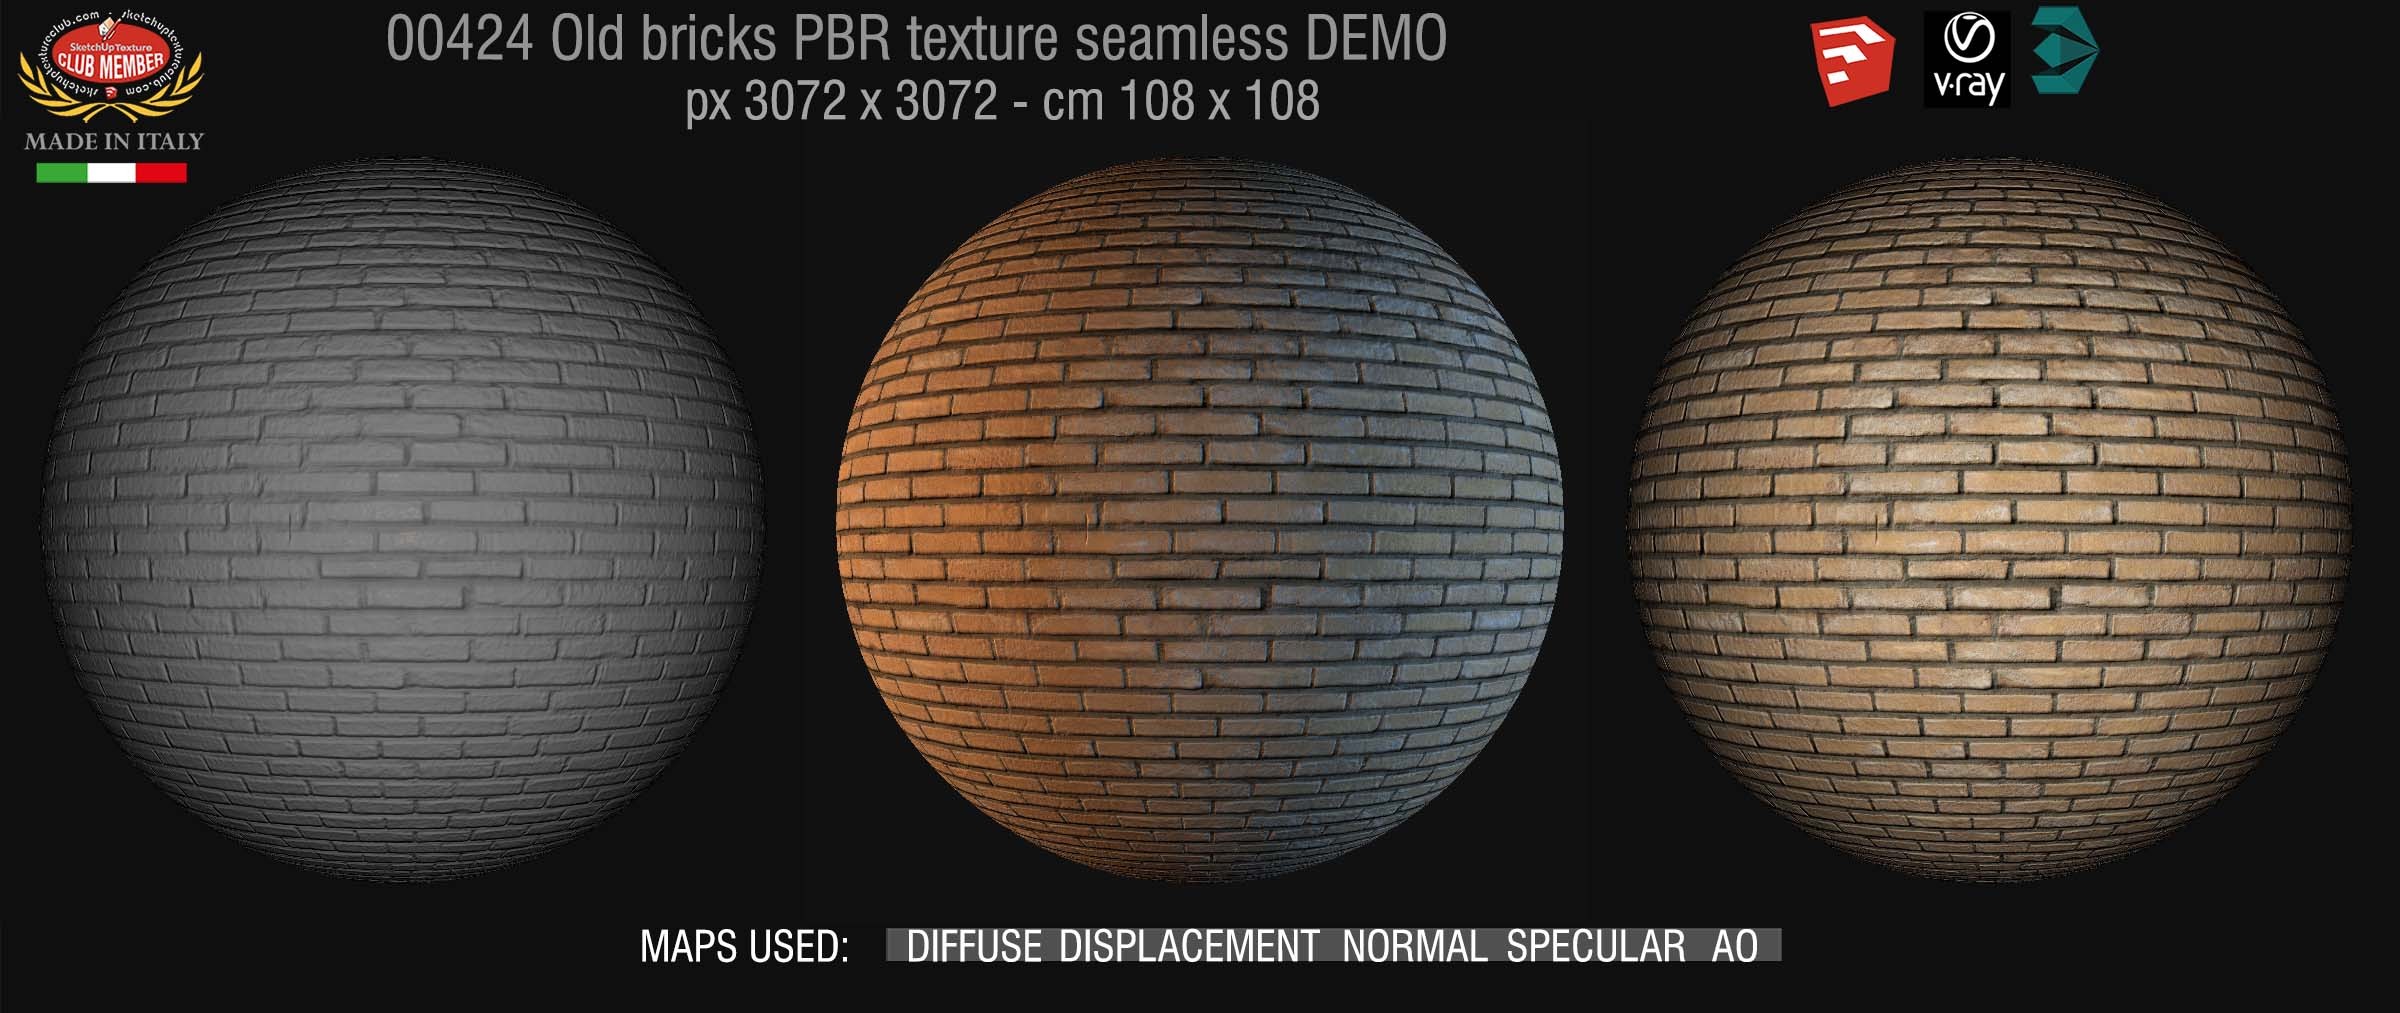 00424 Old bricks PBR texture seamless DEMO